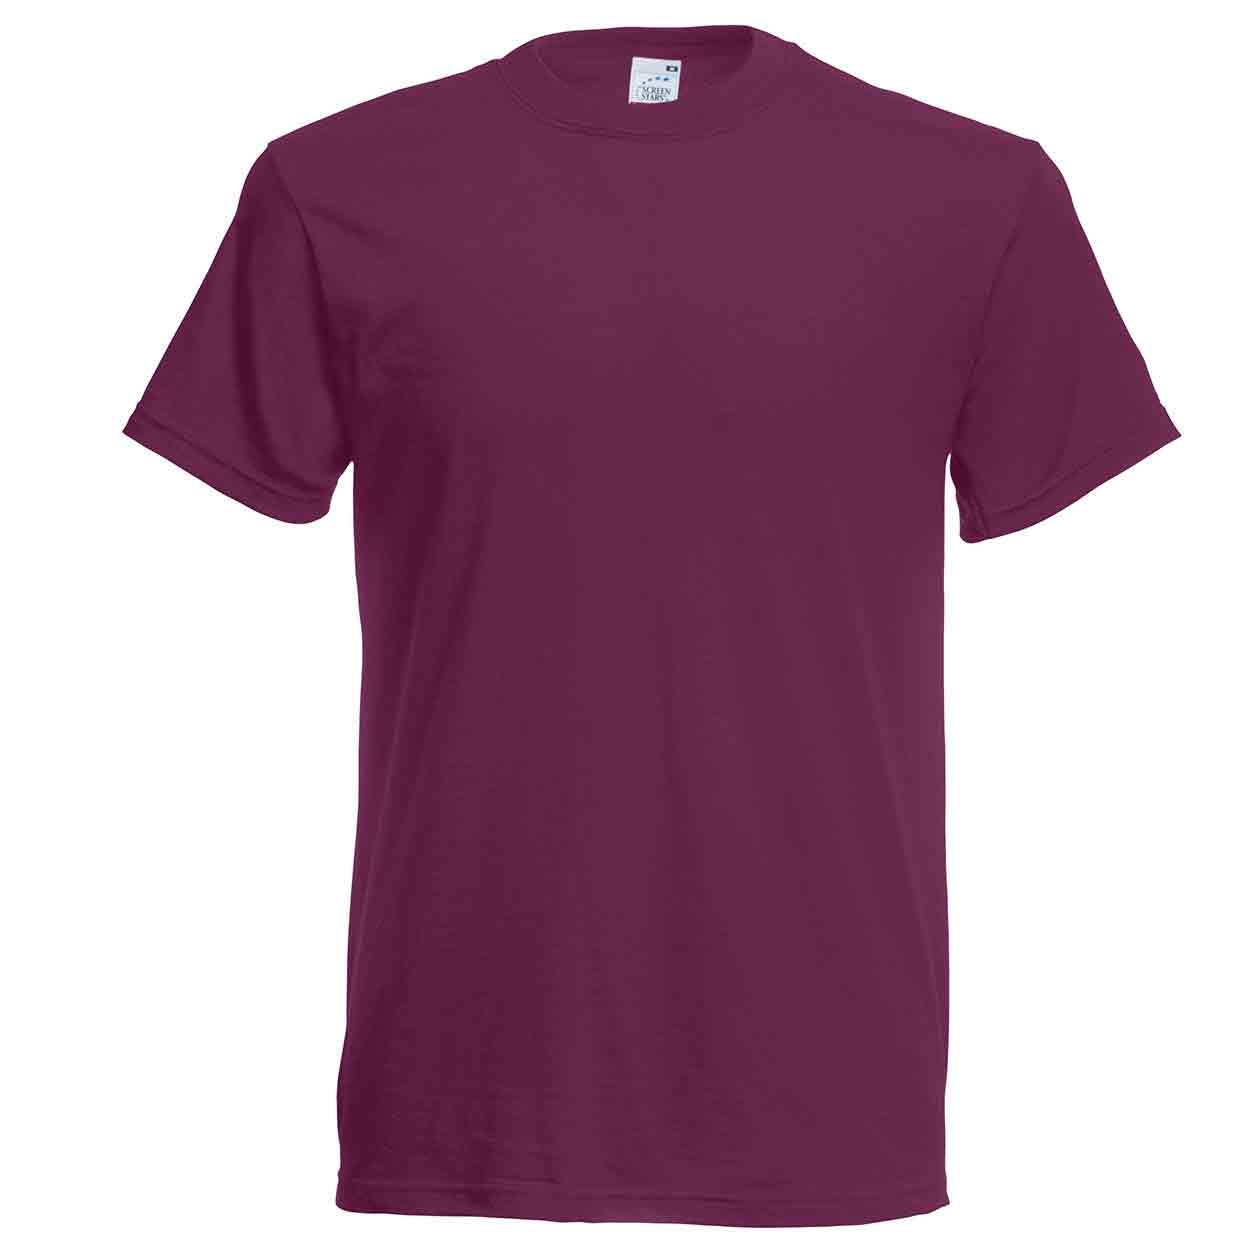 Fruit of the Loom SS12 Original Full Cut T - Lightweight T Shirts - Unisex  / Men's T Shirts - T Shirts - Leisurewear - Best Workwear